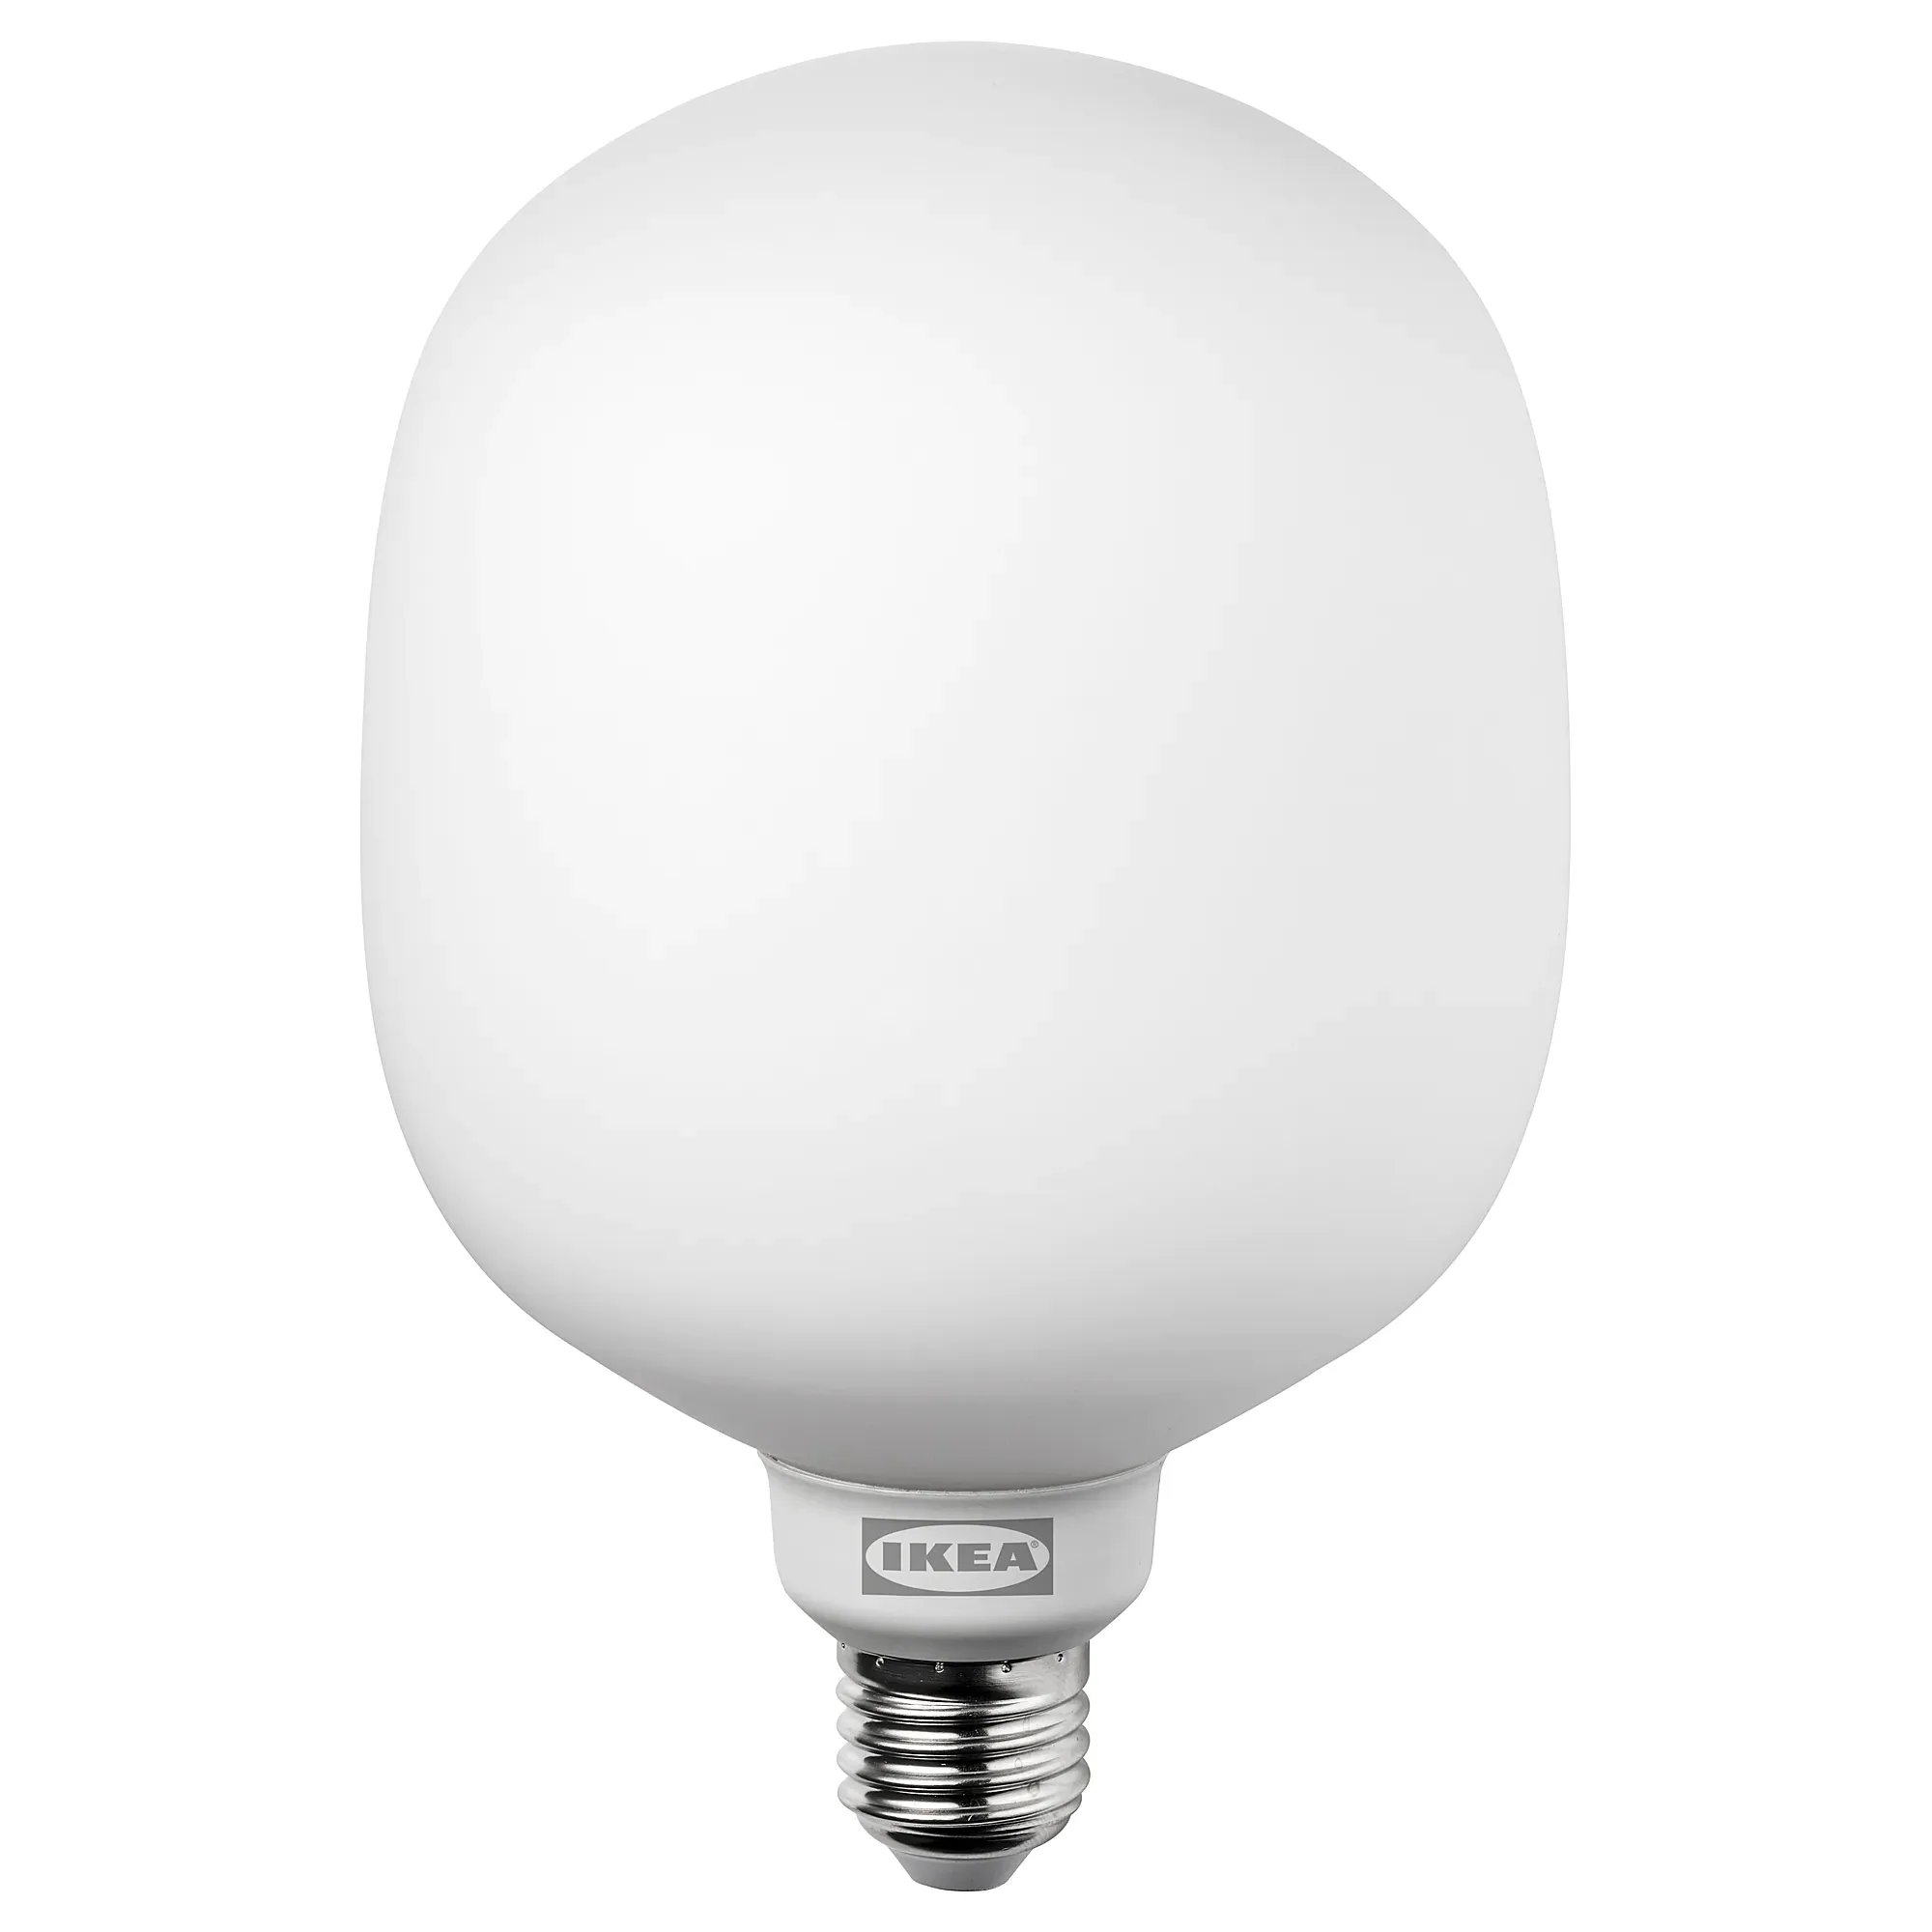 Tradfri LED bulb E27 470 lumen, dimmable, opal white